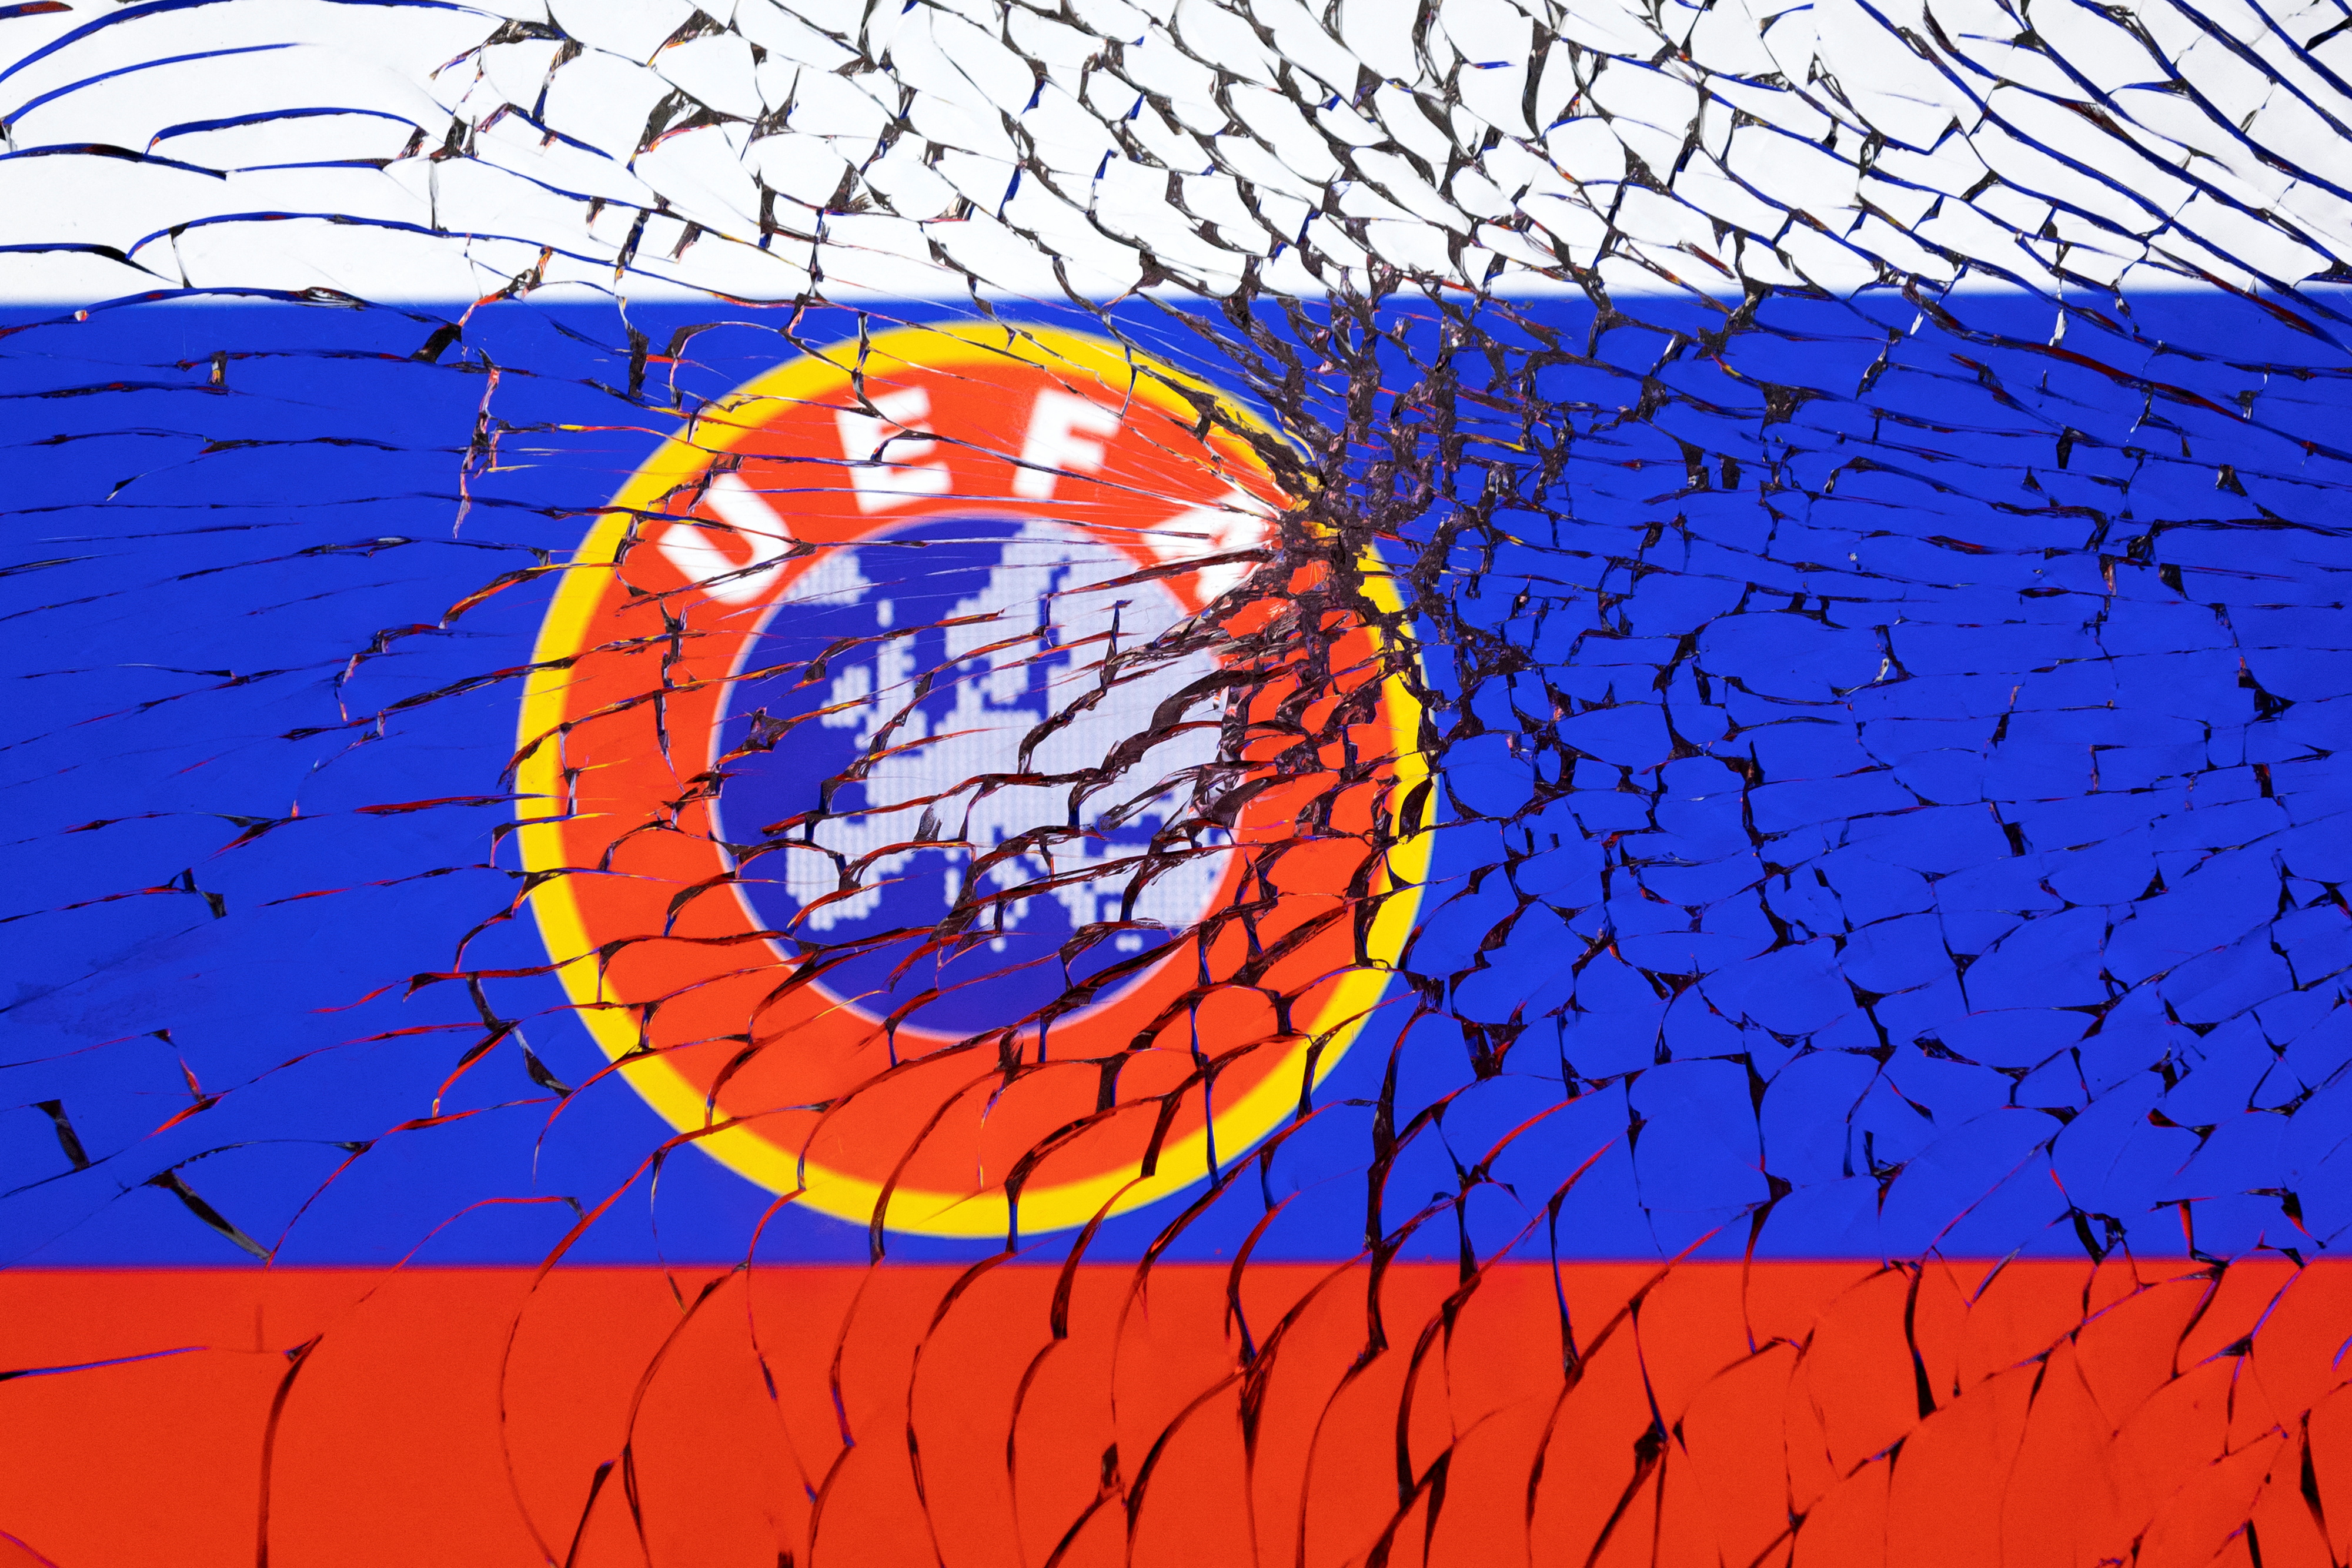 Illustration shows UEFA logo and Russian flag through broken glass